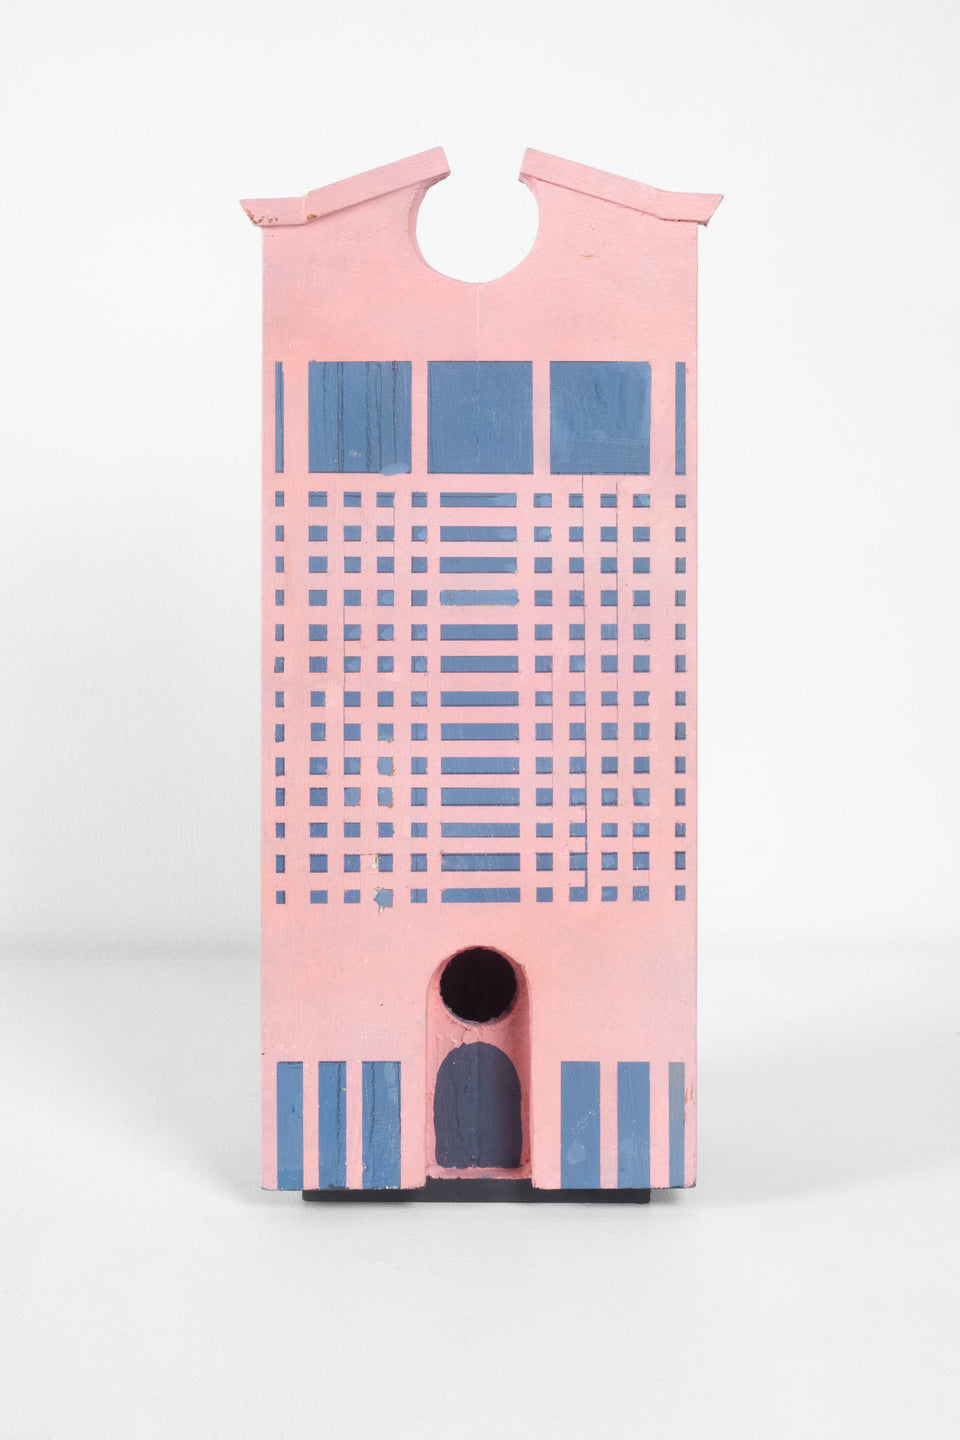 The Manhattan birdhouse by Jason Sargenti, 2020 USA